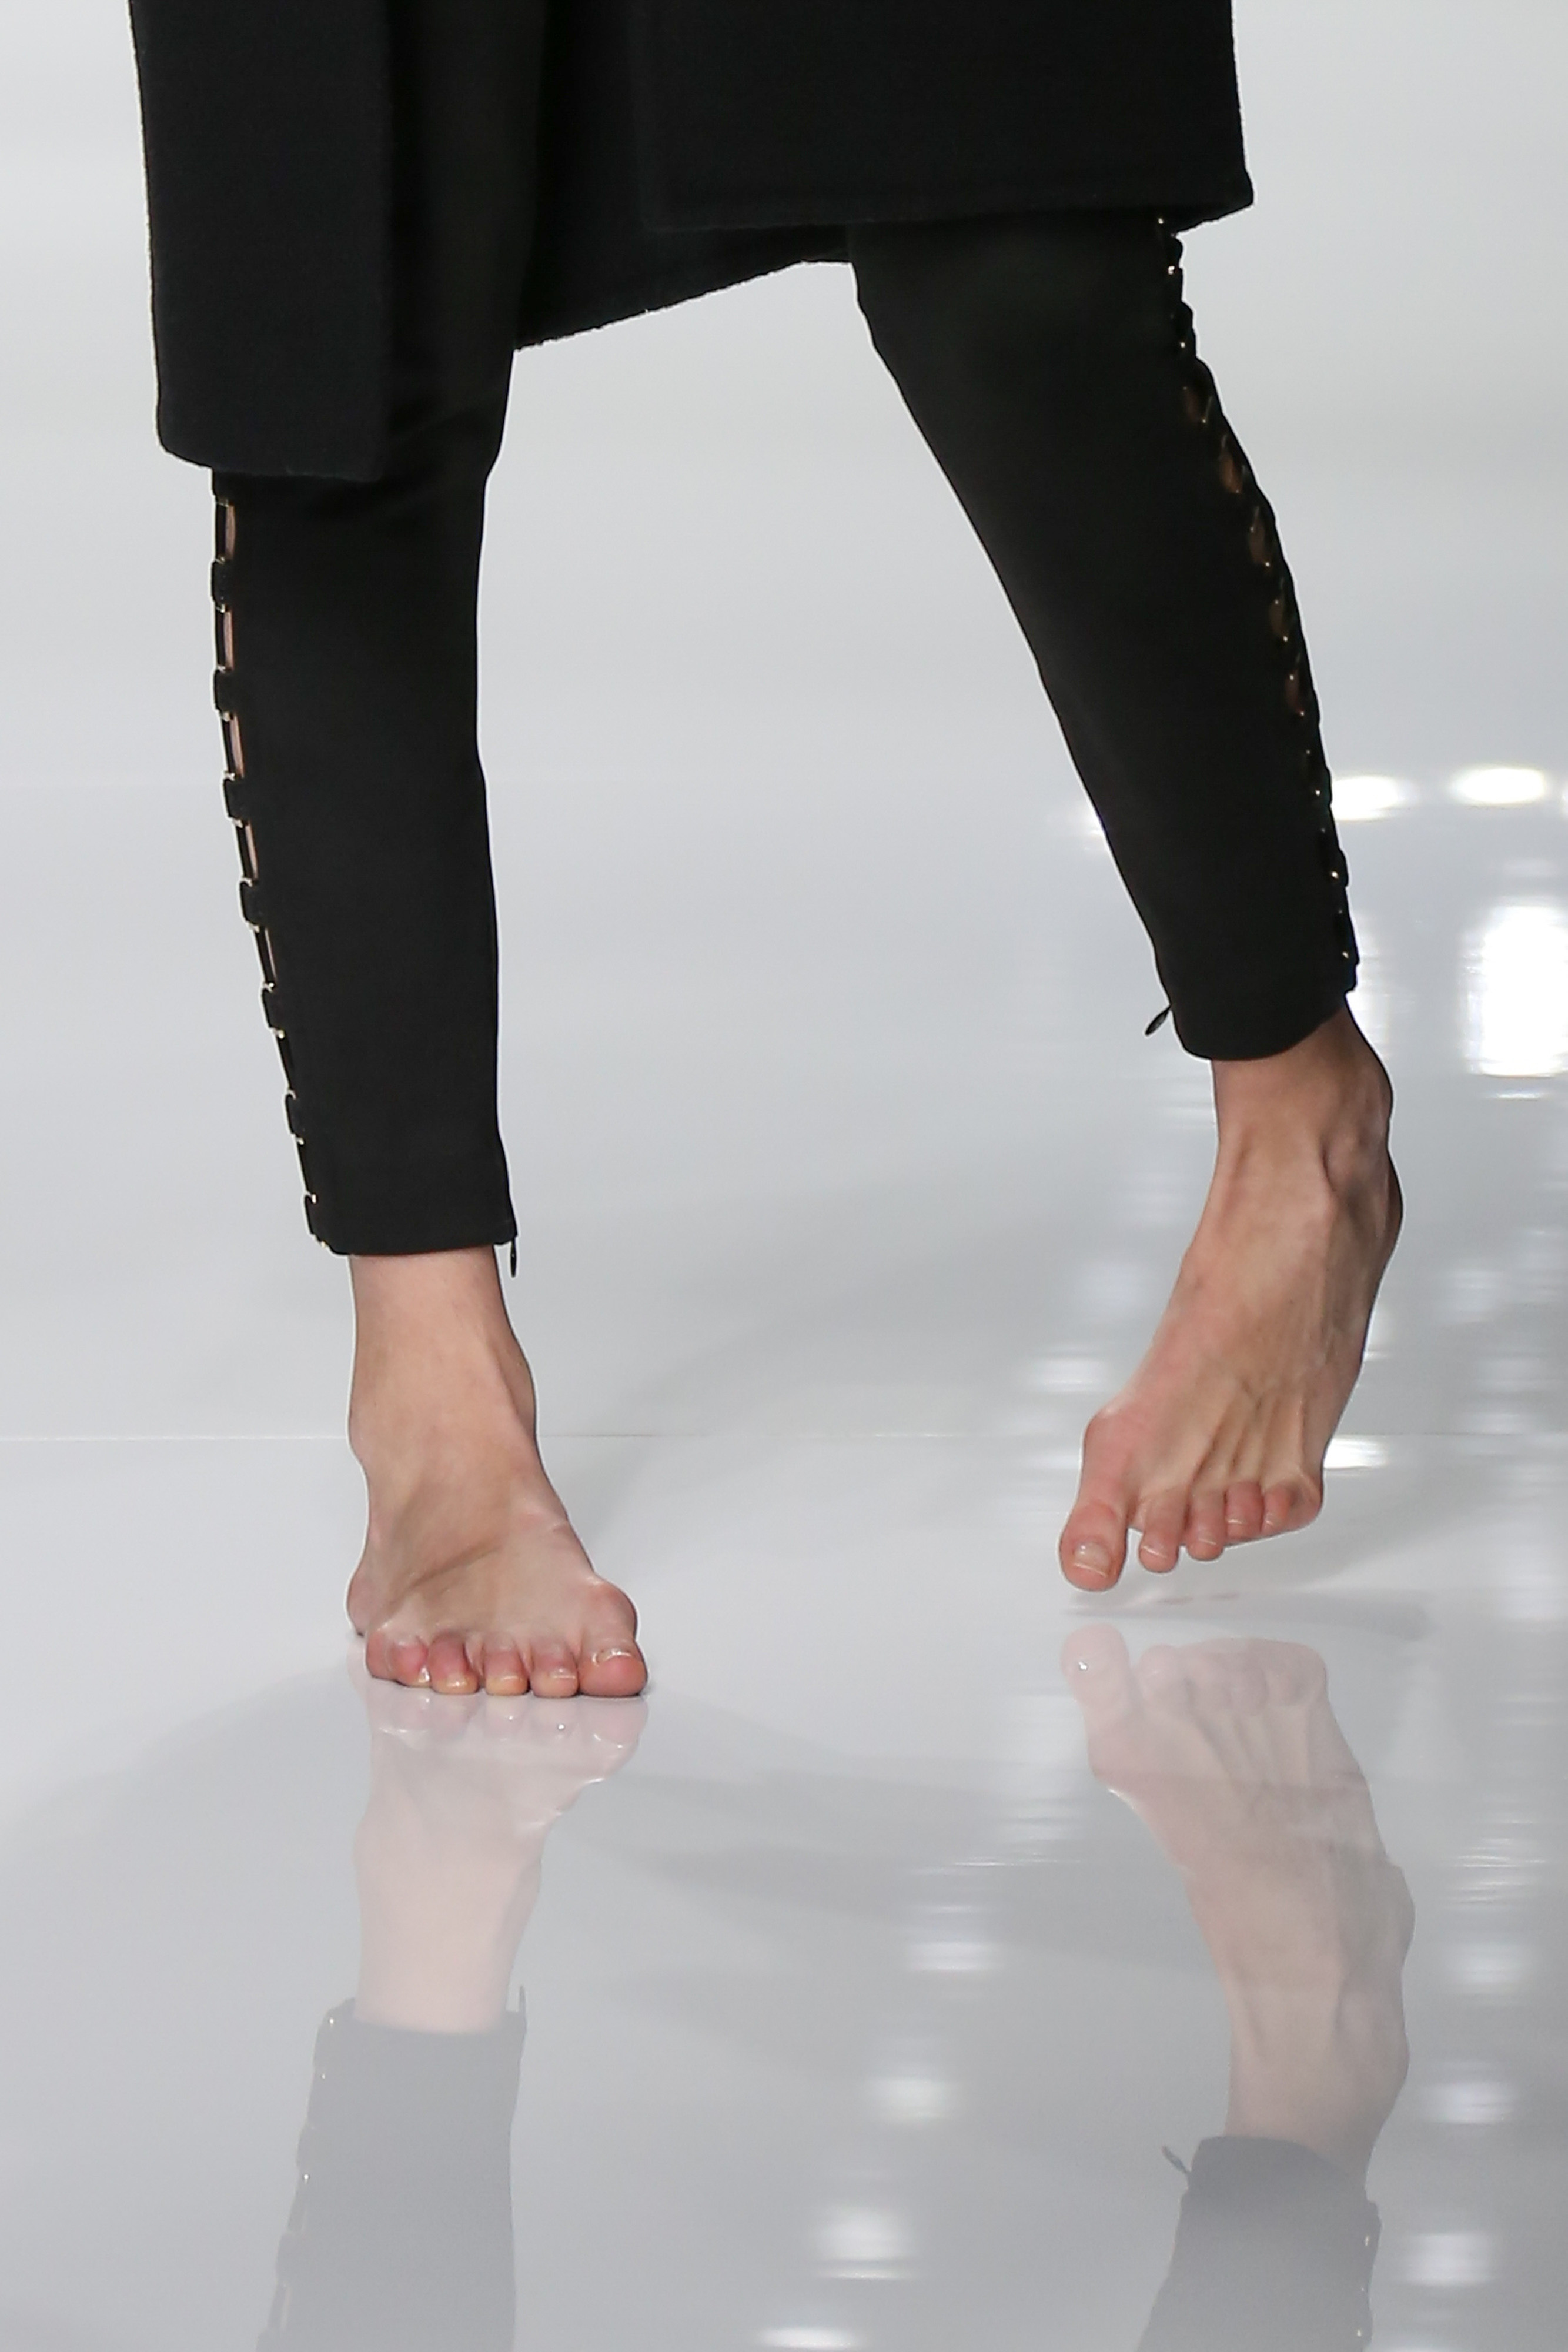 Gigi Hadids Feet 